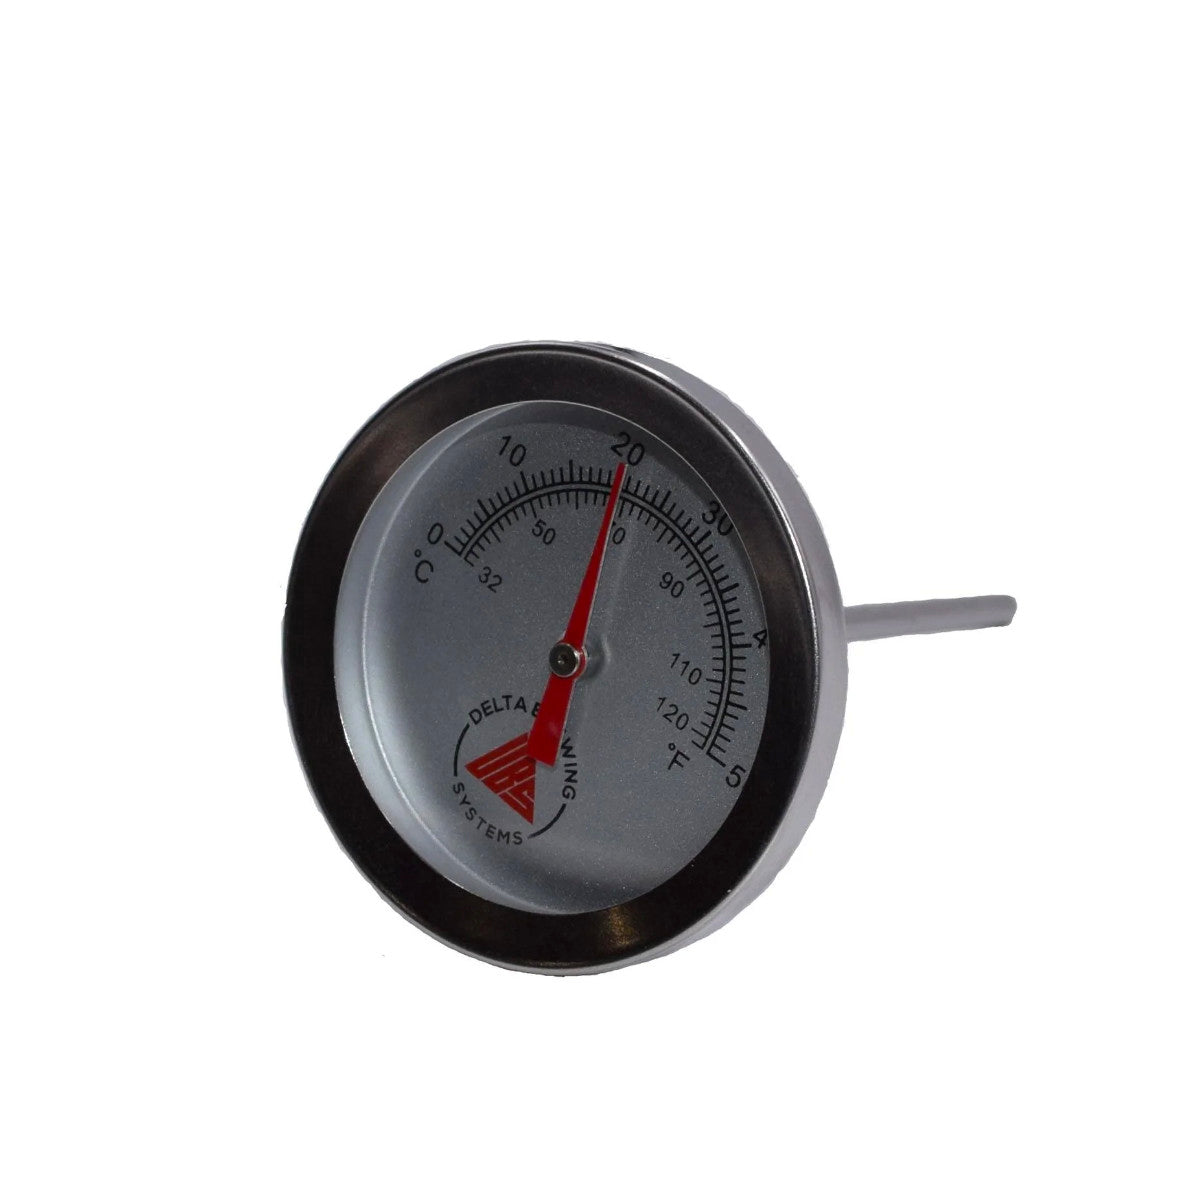 Fermtank thermometer